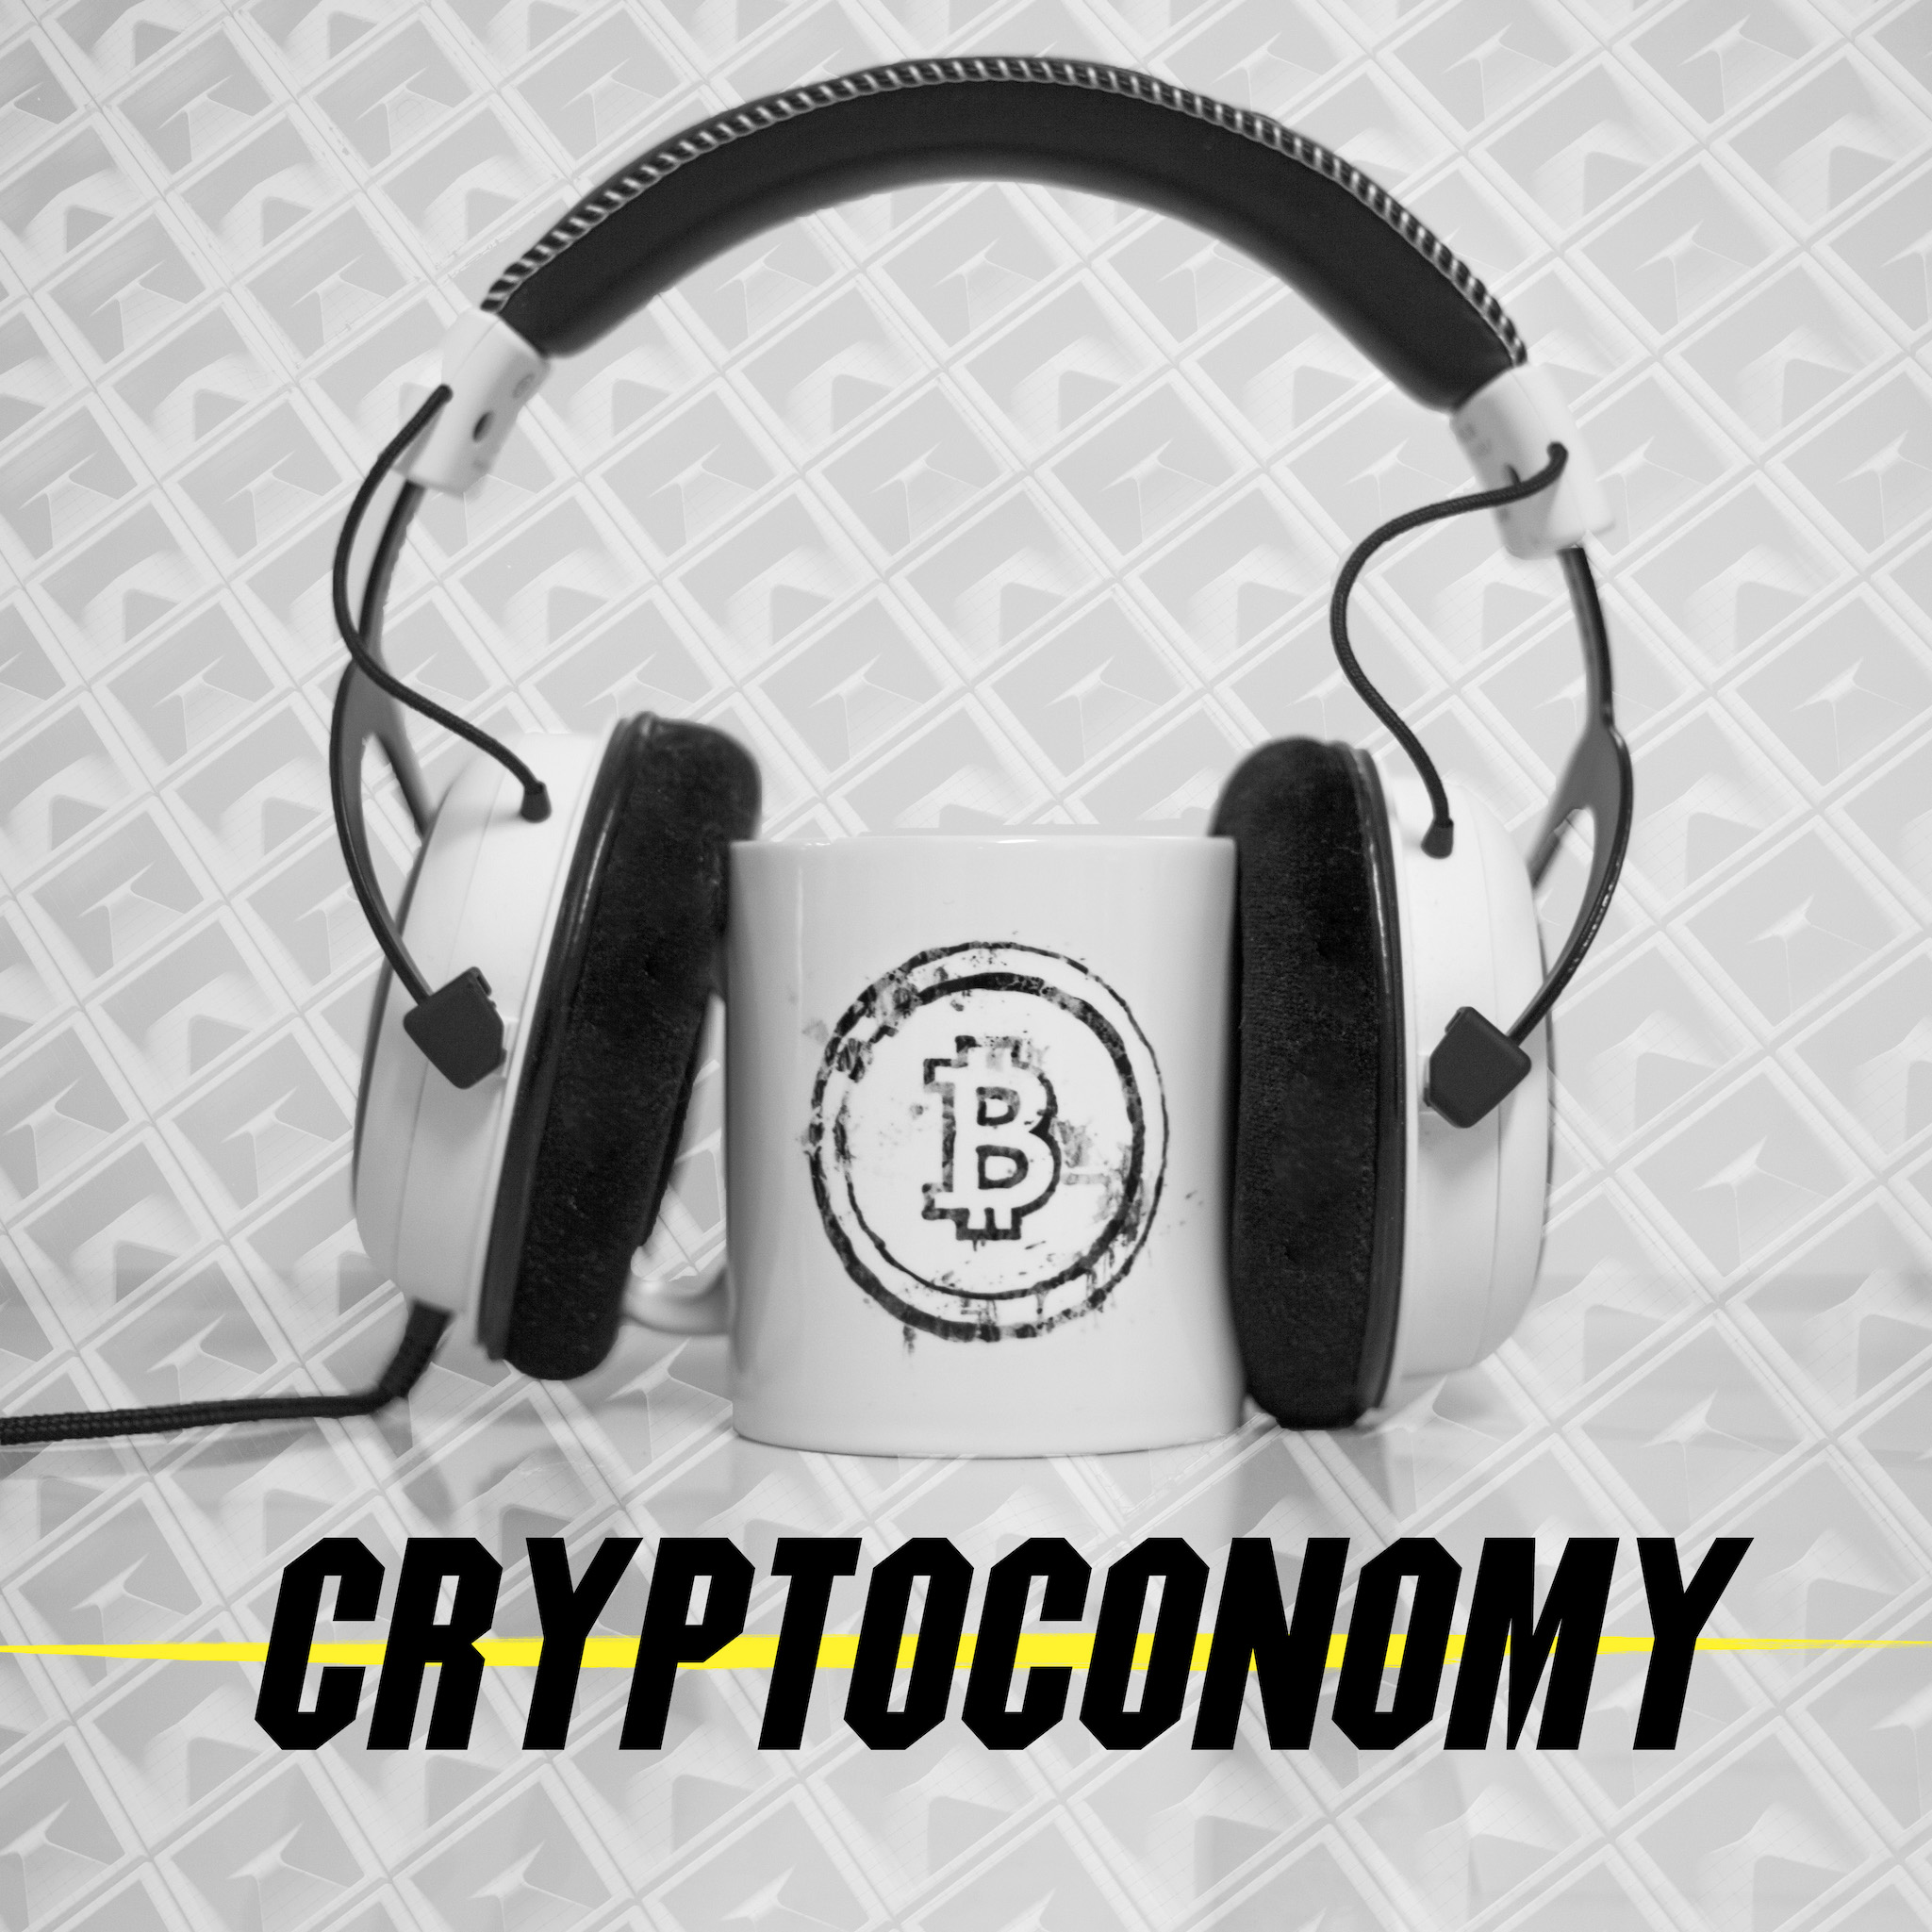 CryptoQuikRead_188 - The Cryptocurrency Phenomenon [Part 3]